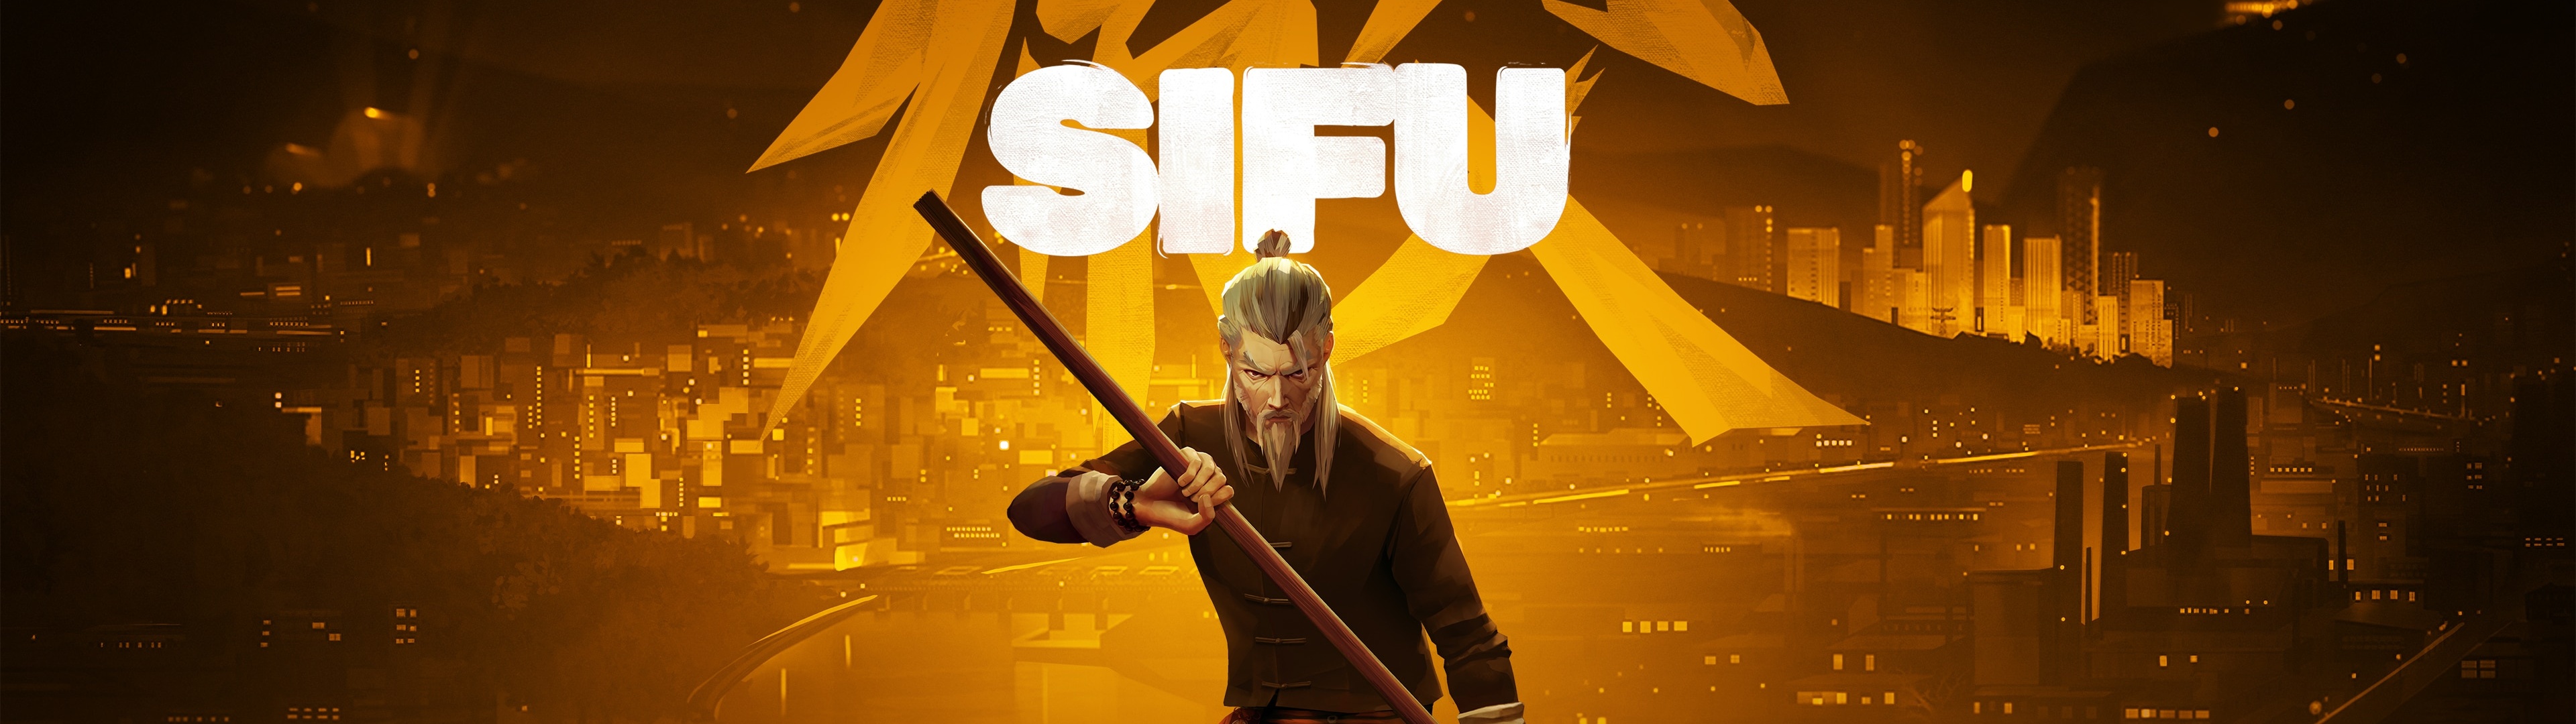 Sifu  game wallpaper at Riot Pixels image